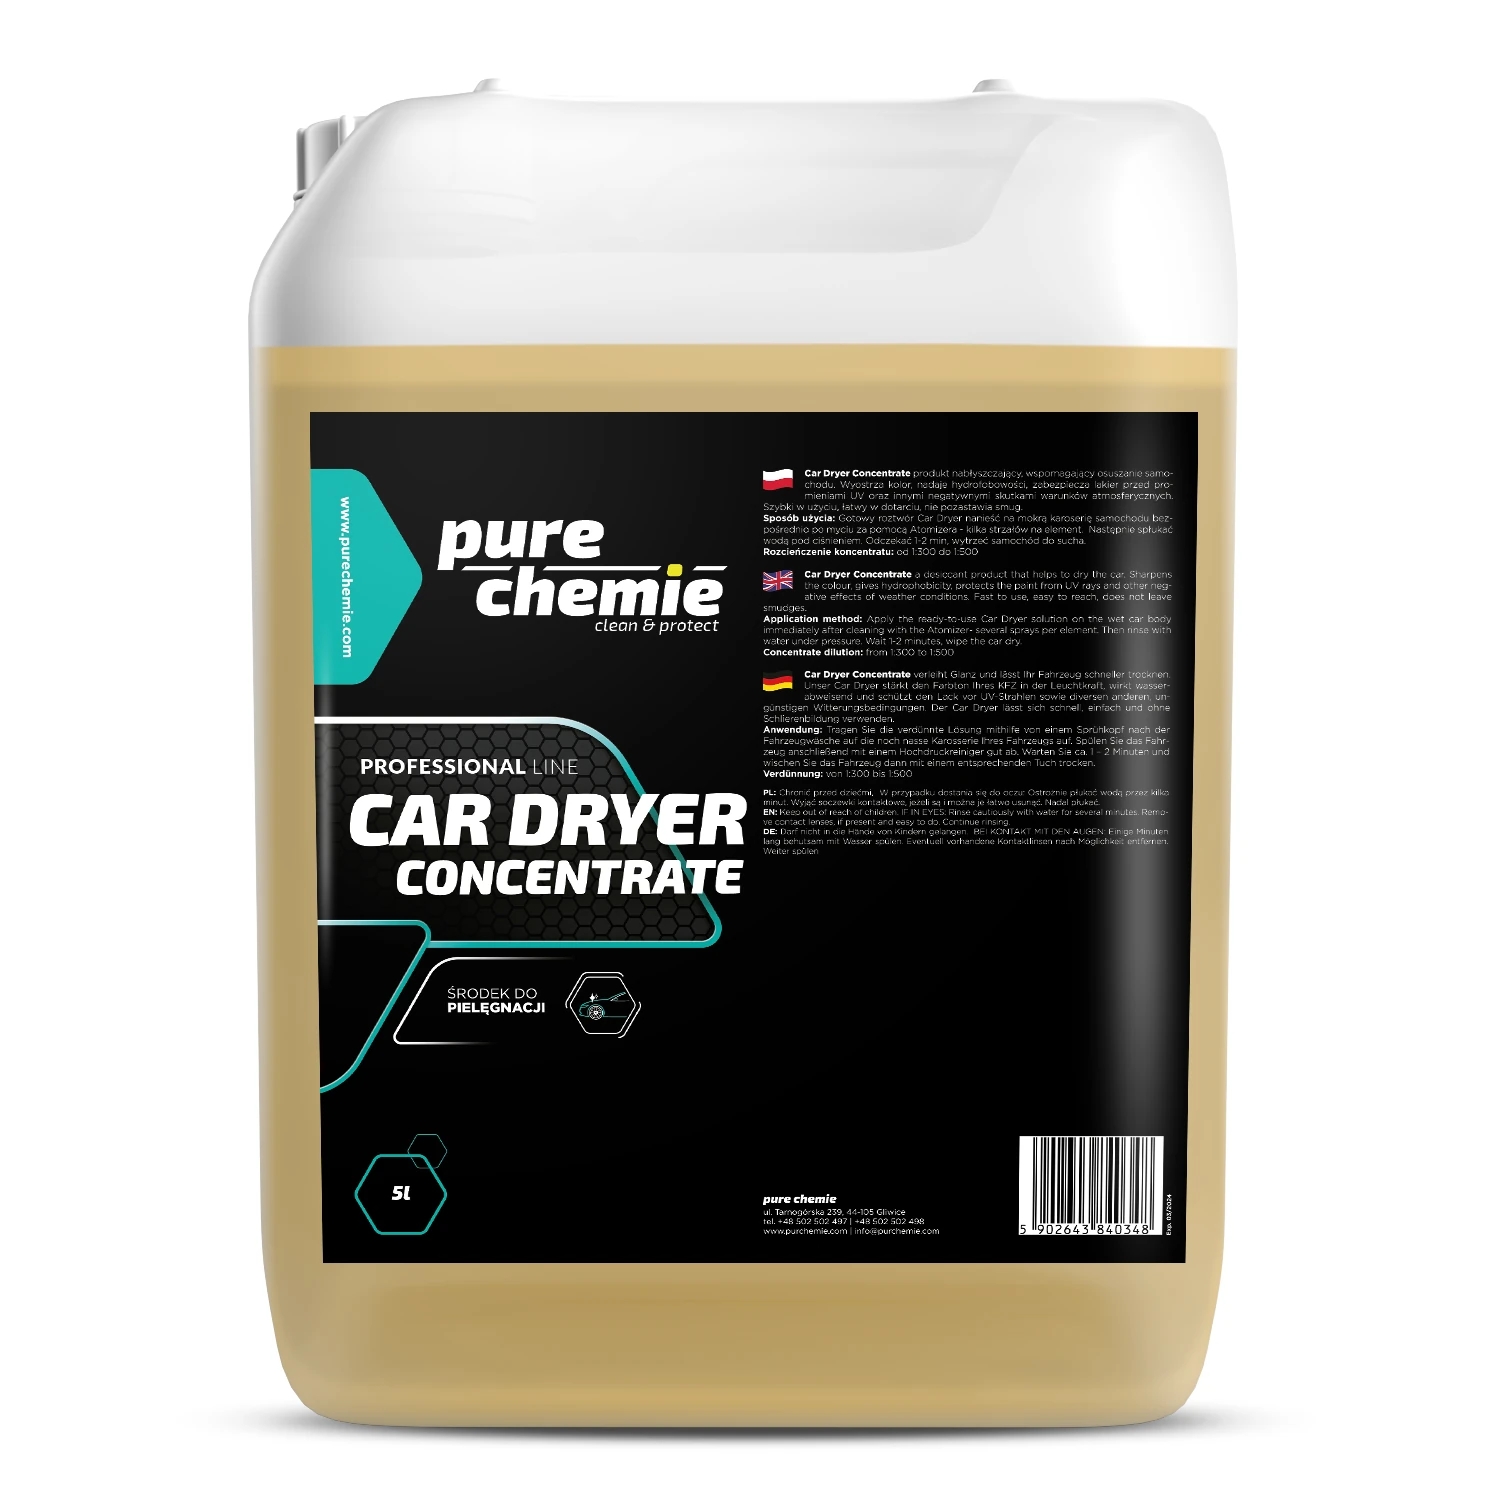 Image of Pure Chemie Car Dryer Concentrate - wosk na mokro, wspomaga osuszanie samochodu 5L